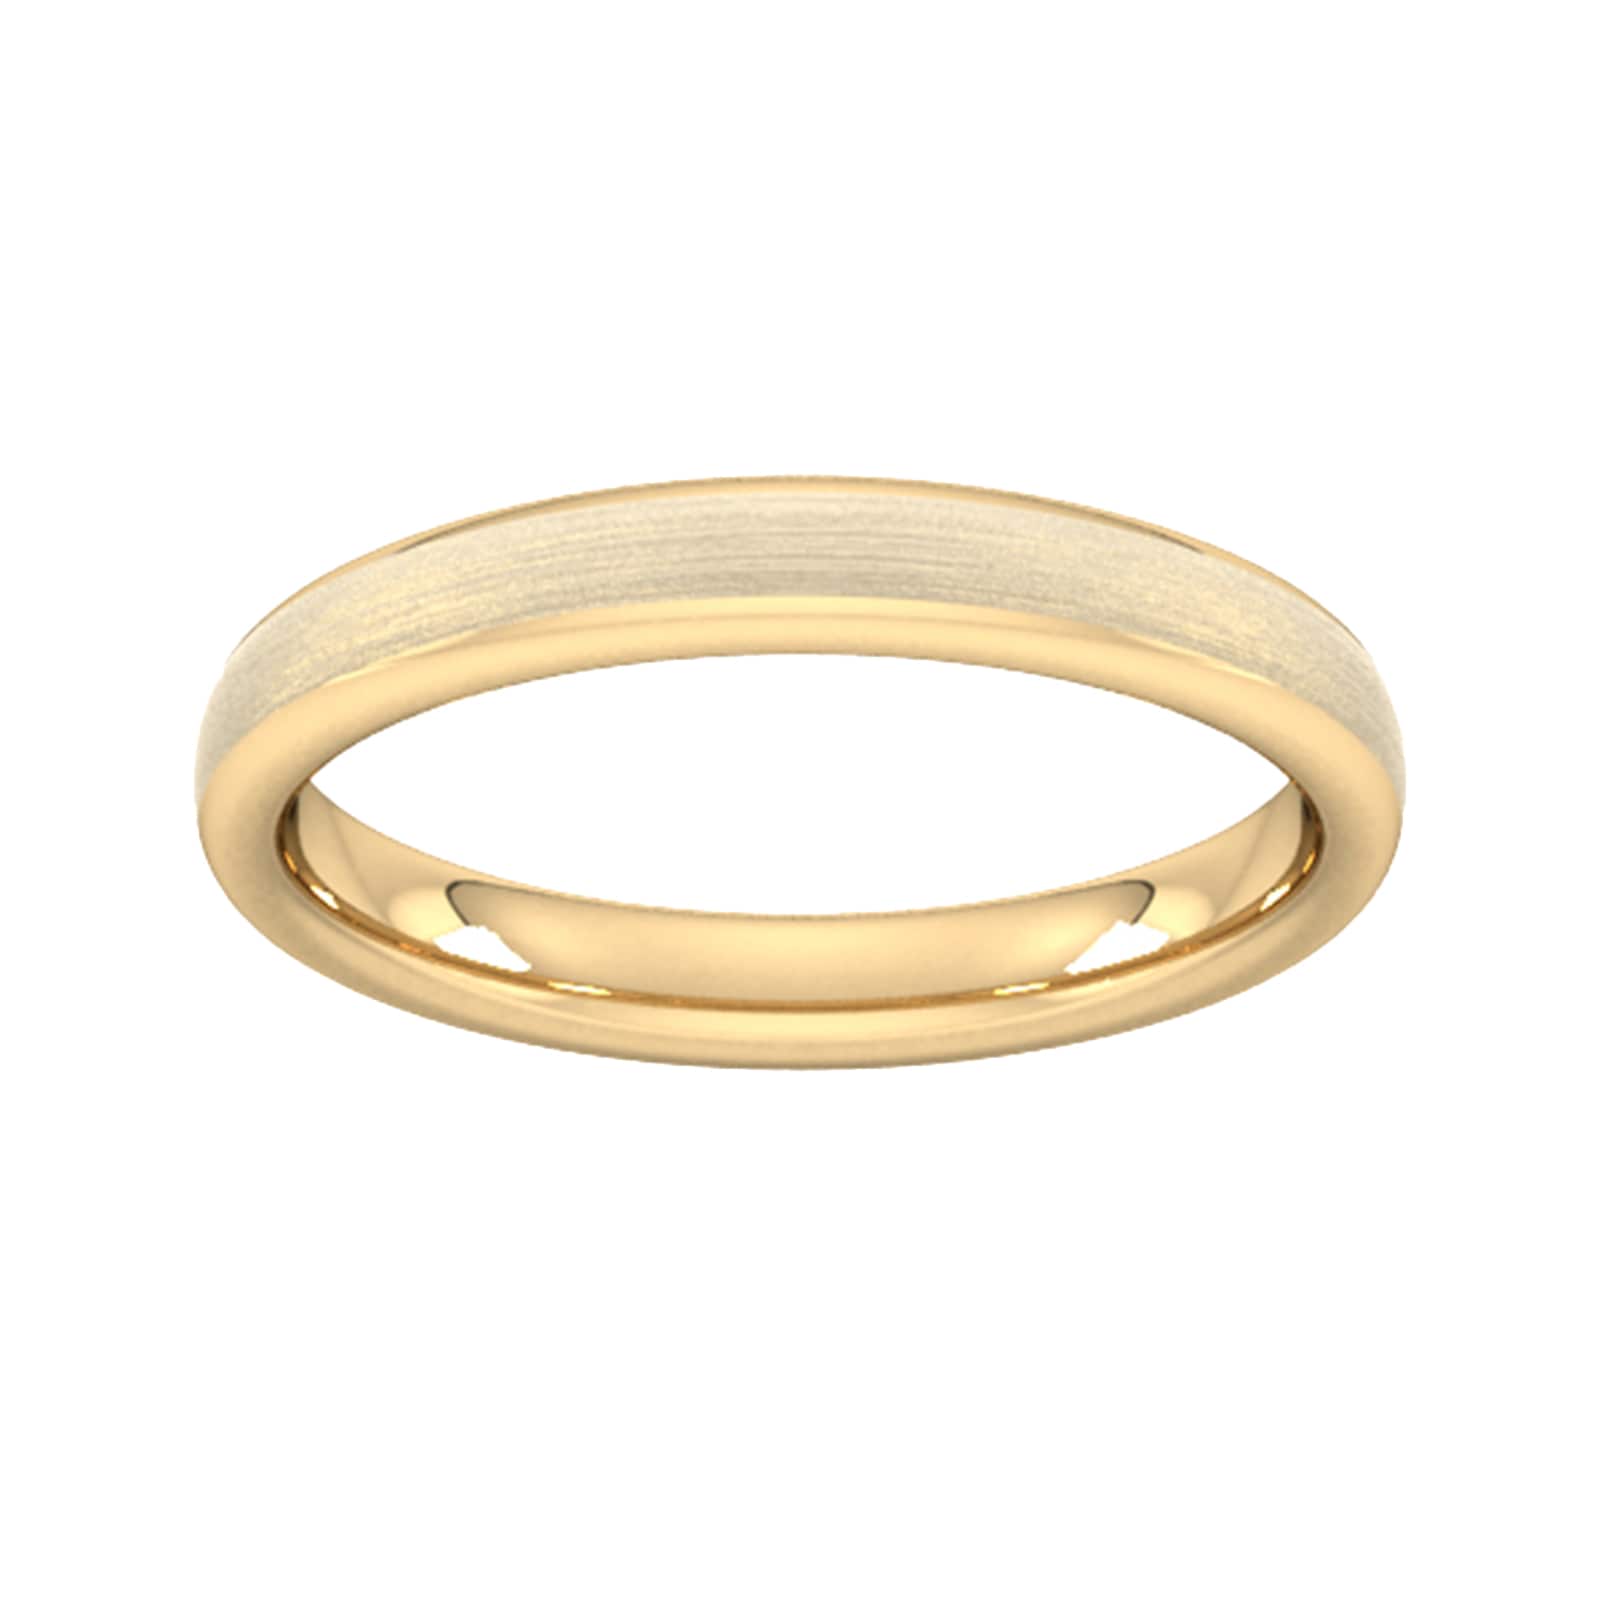 3mm Slight Court Standard Matt Finished Wedding Ring In 18 Carat Yellow Gold - Ring Size S